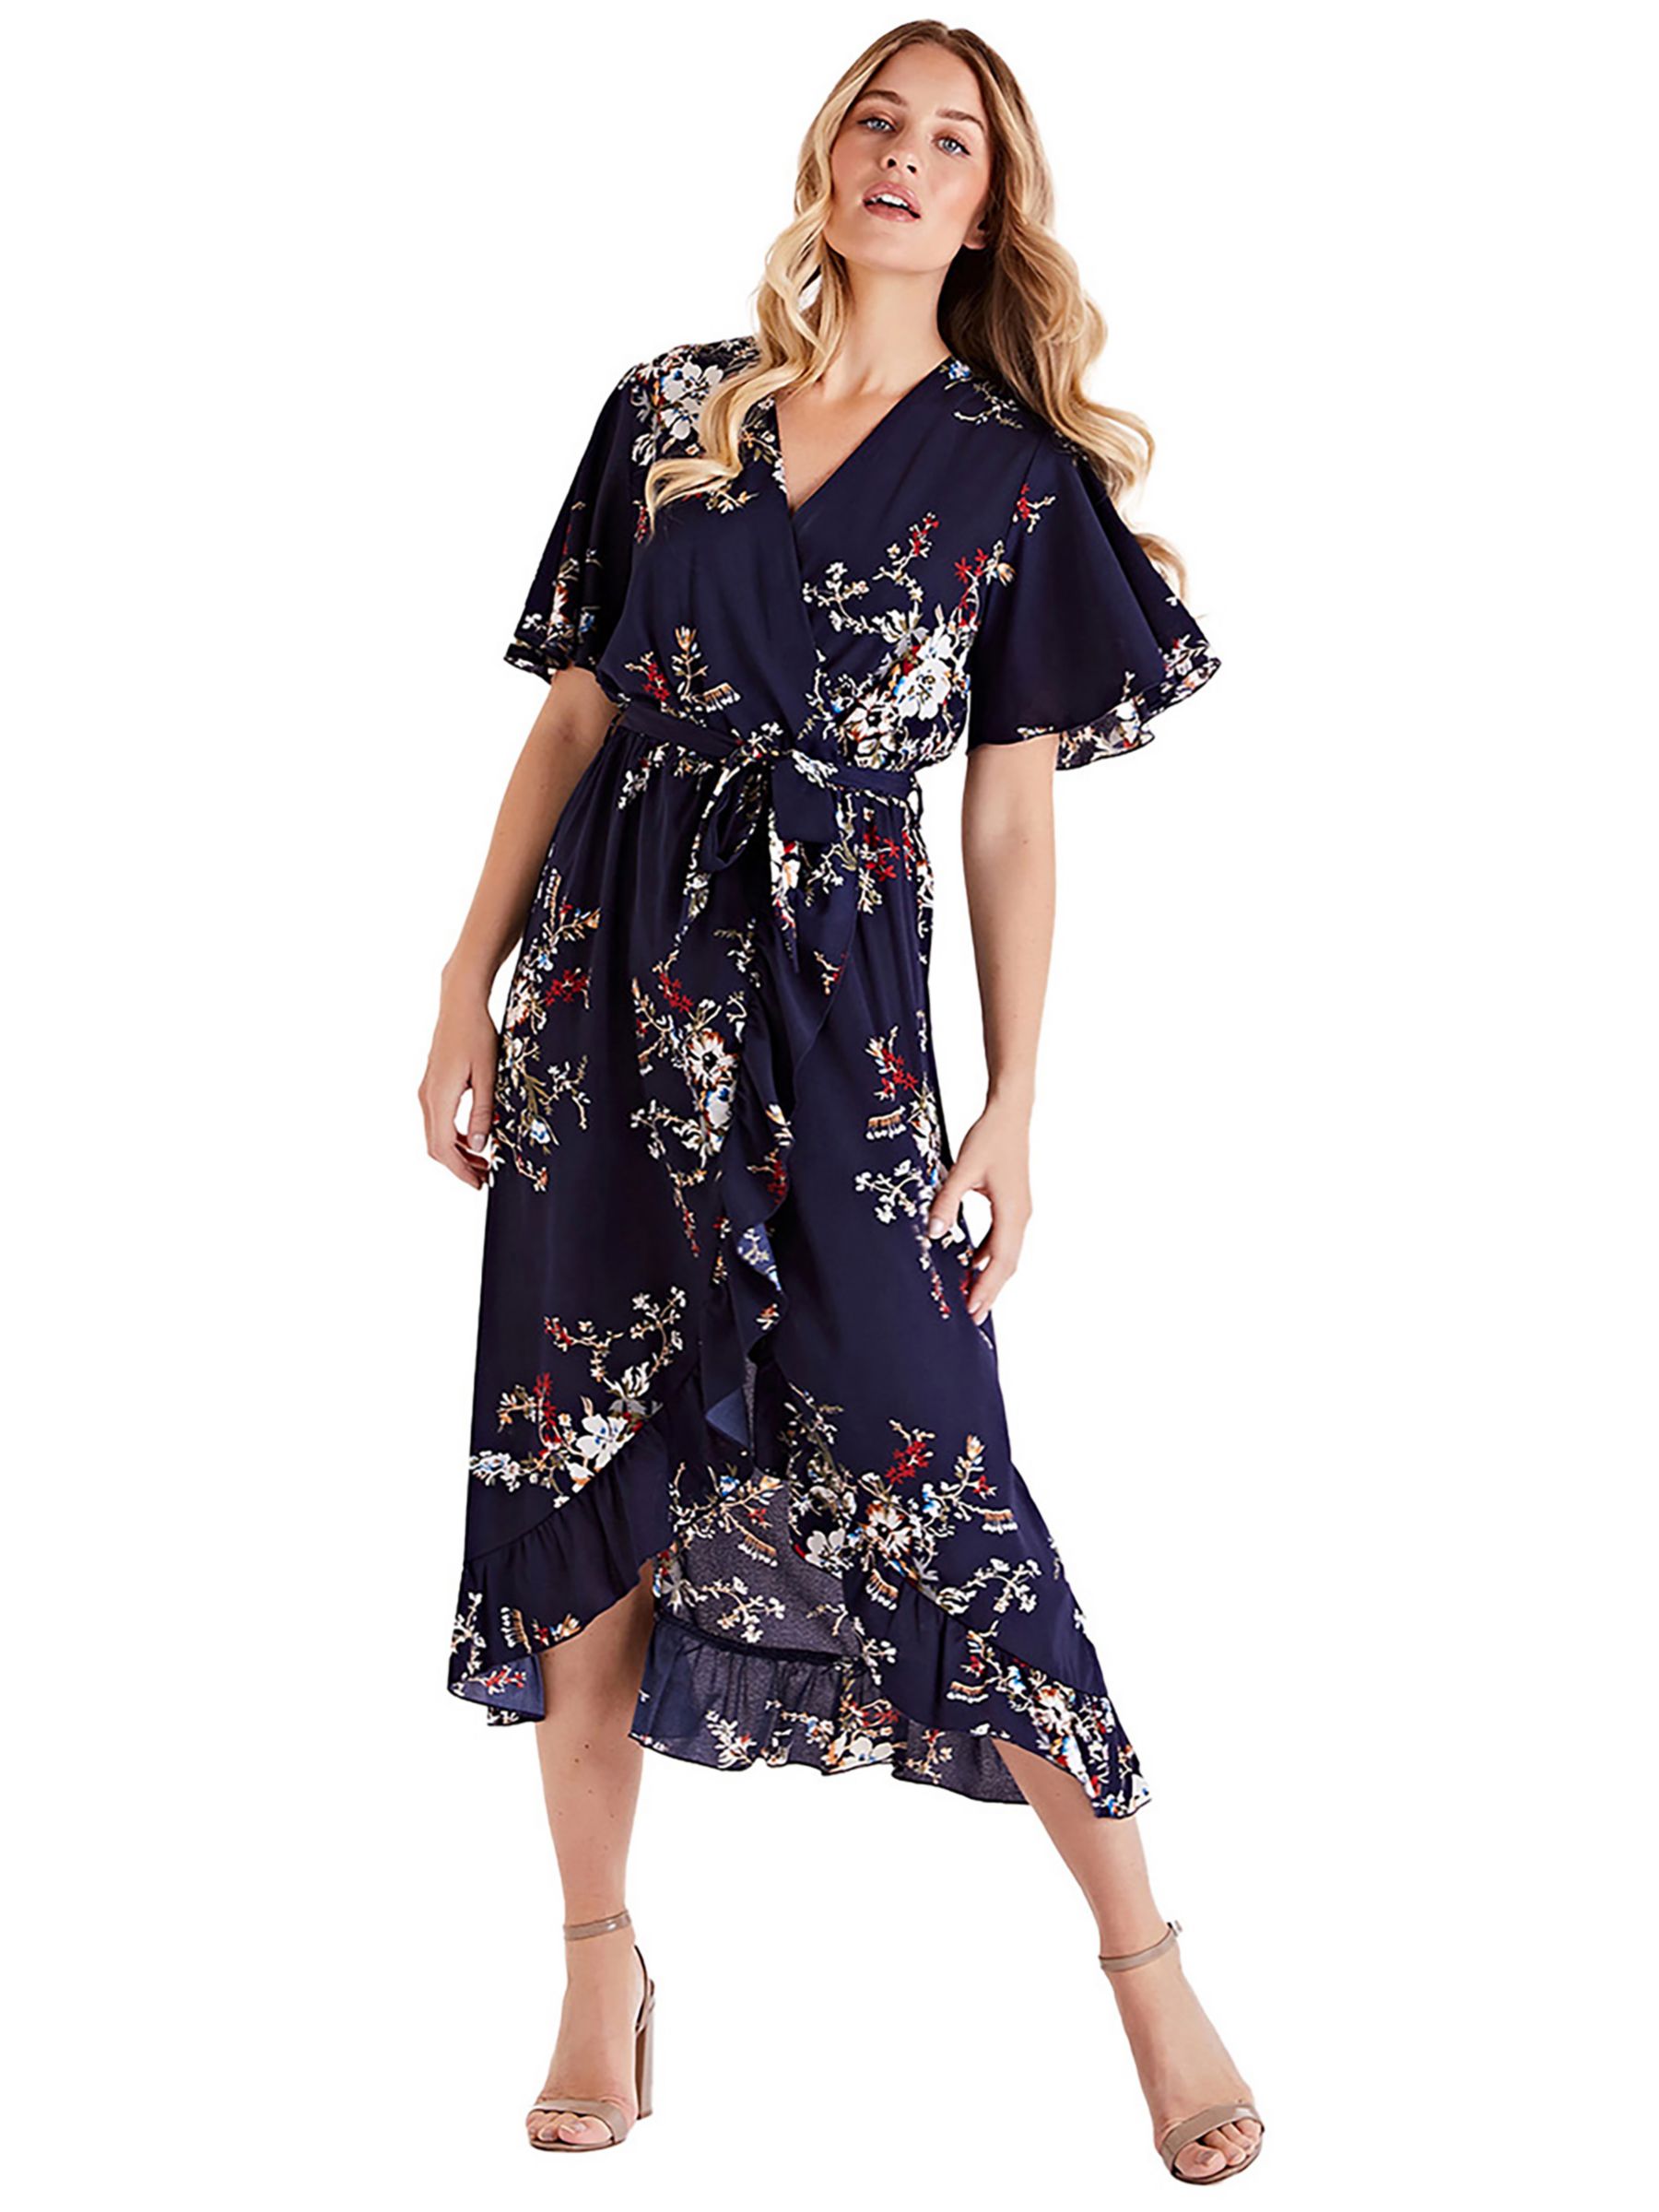 Mela London Floral Short Sleeve Frill Maxi Dress, Navy/Multi, 8